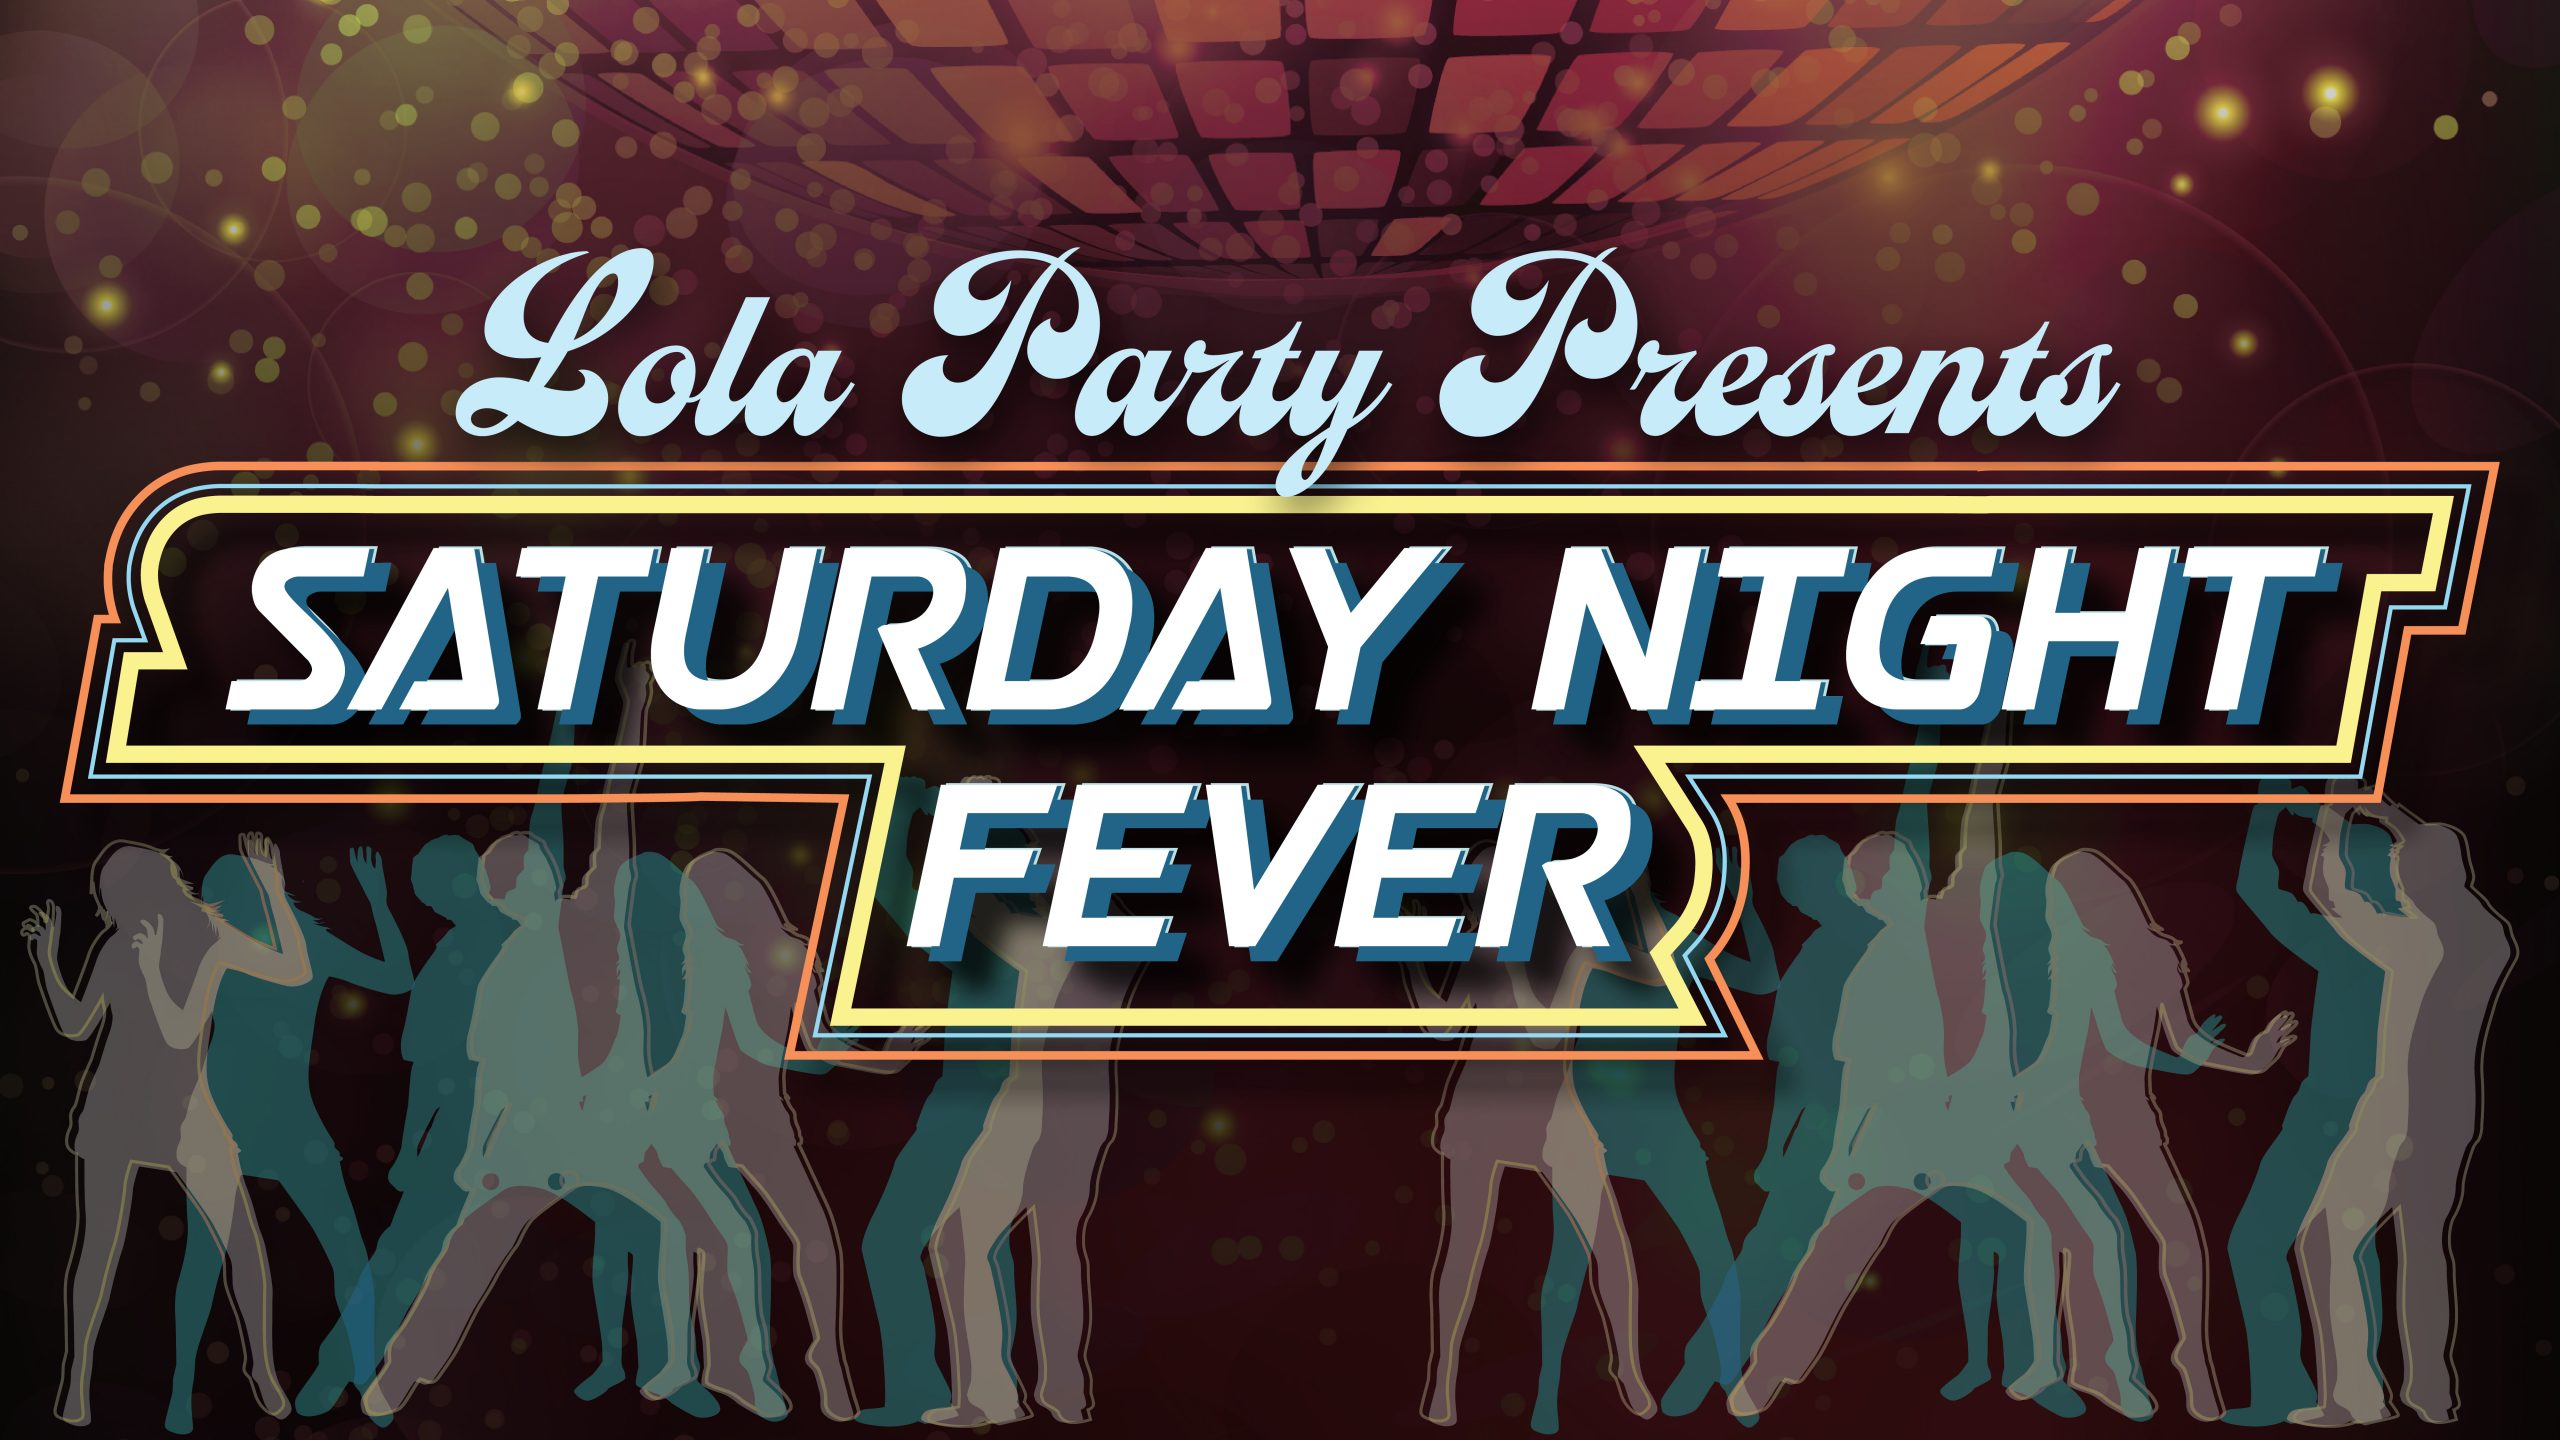 2560x1440 Lola Party Presents: Saturday Night Fever | Lola Magazine